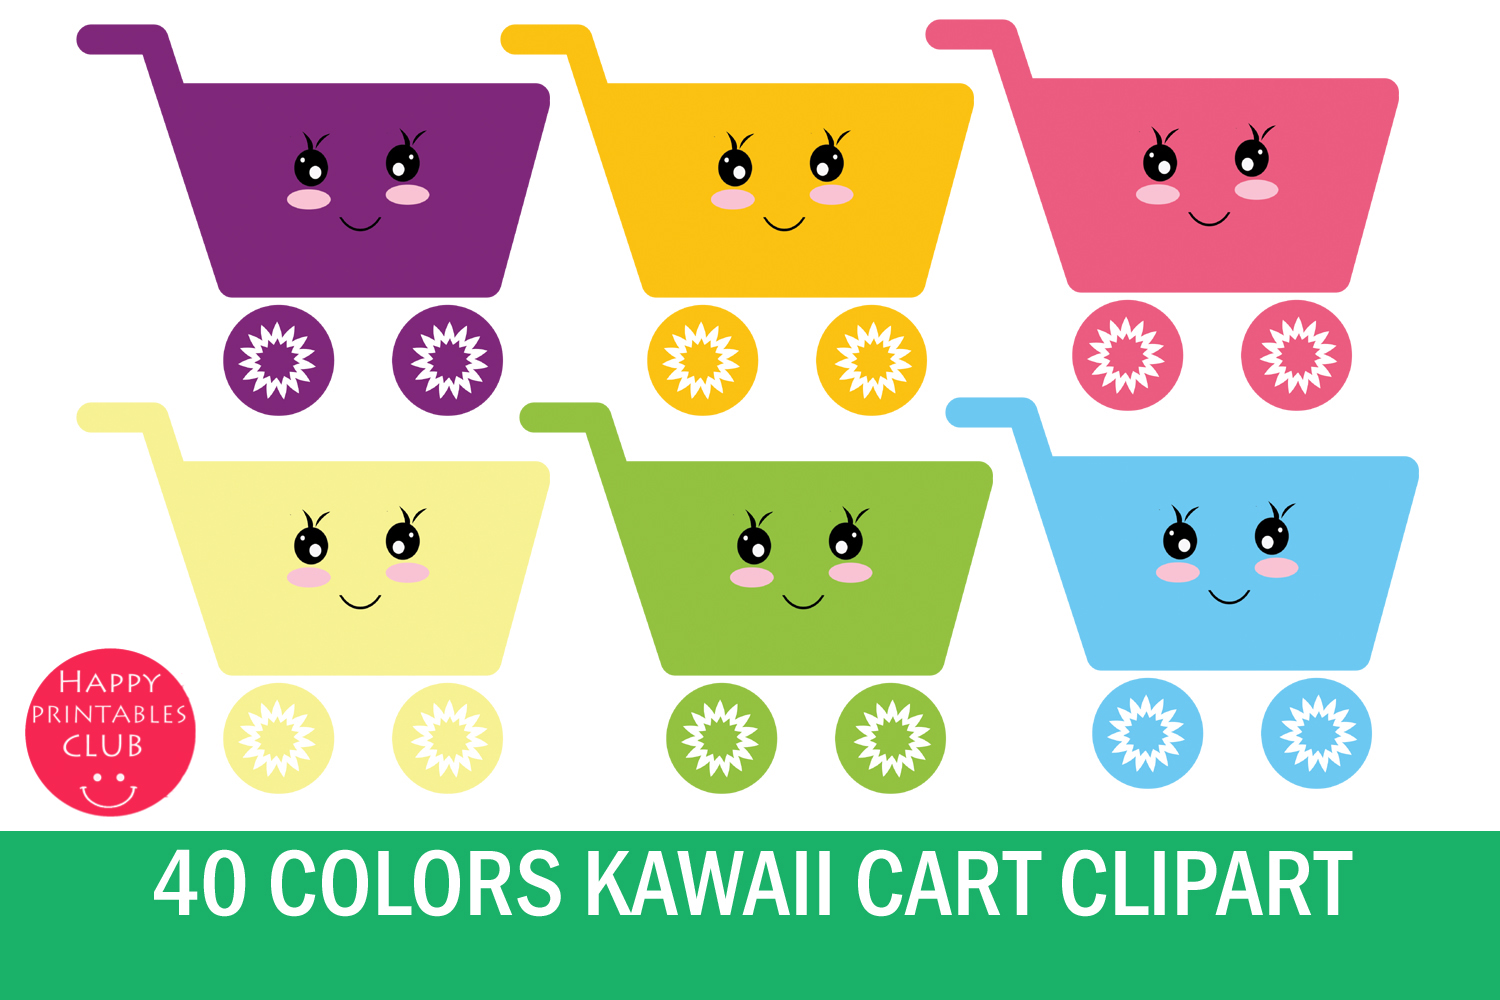 Kawaii Cart Clipart